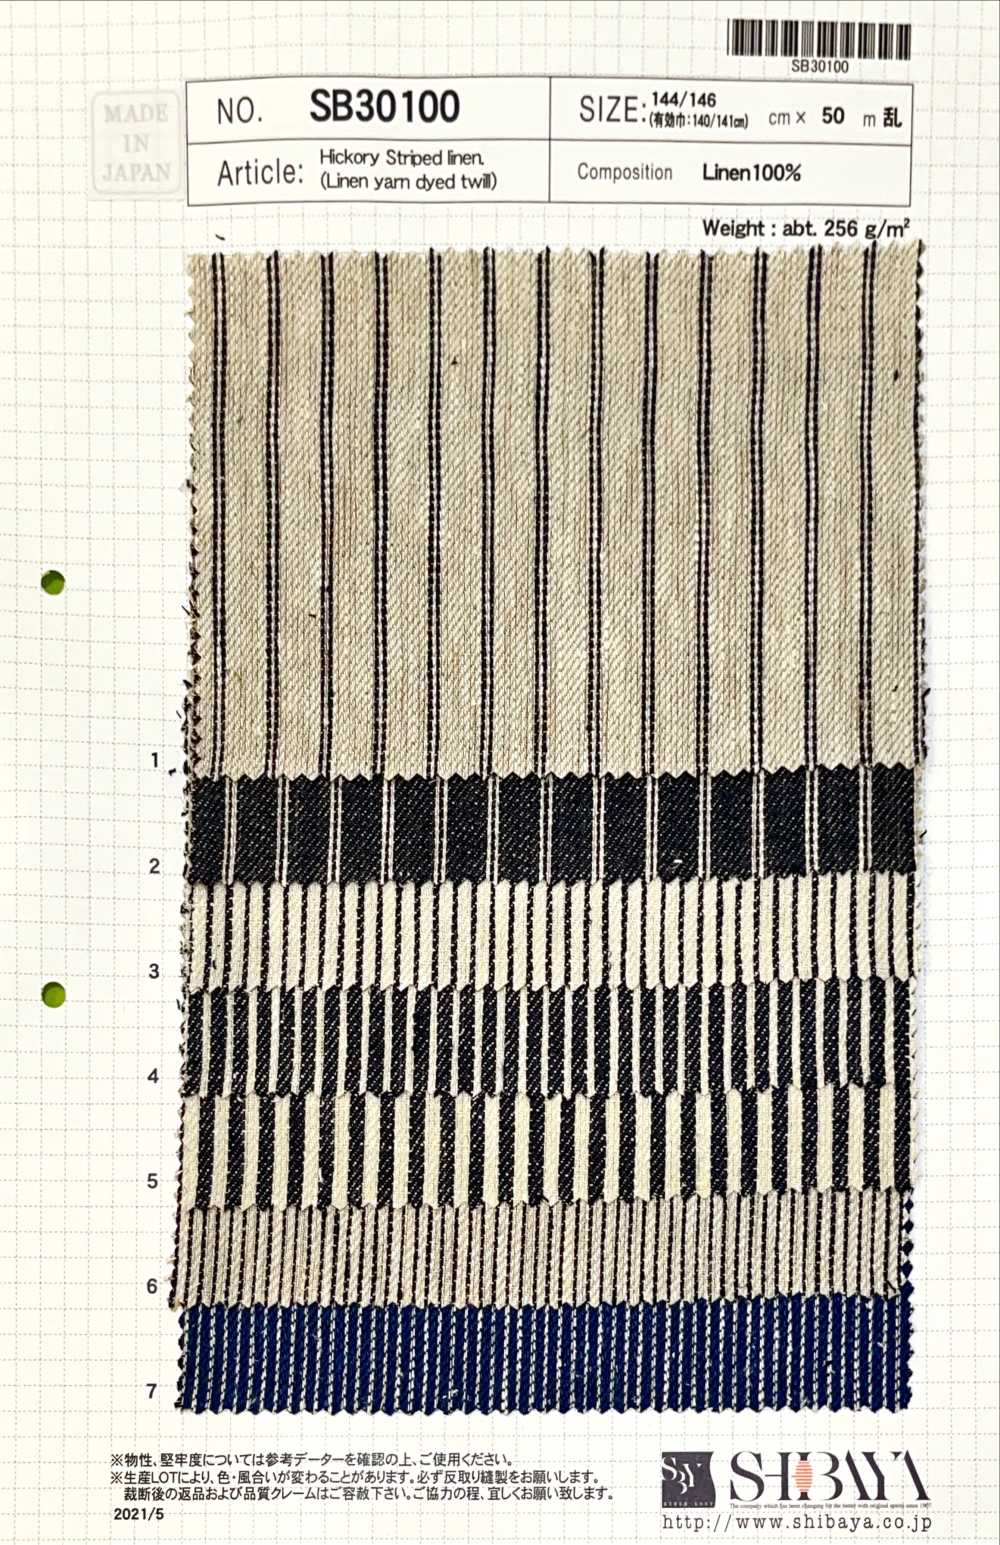 SB30100 Hickory Striped Linen[Textile / Fabric] SHIBAYA